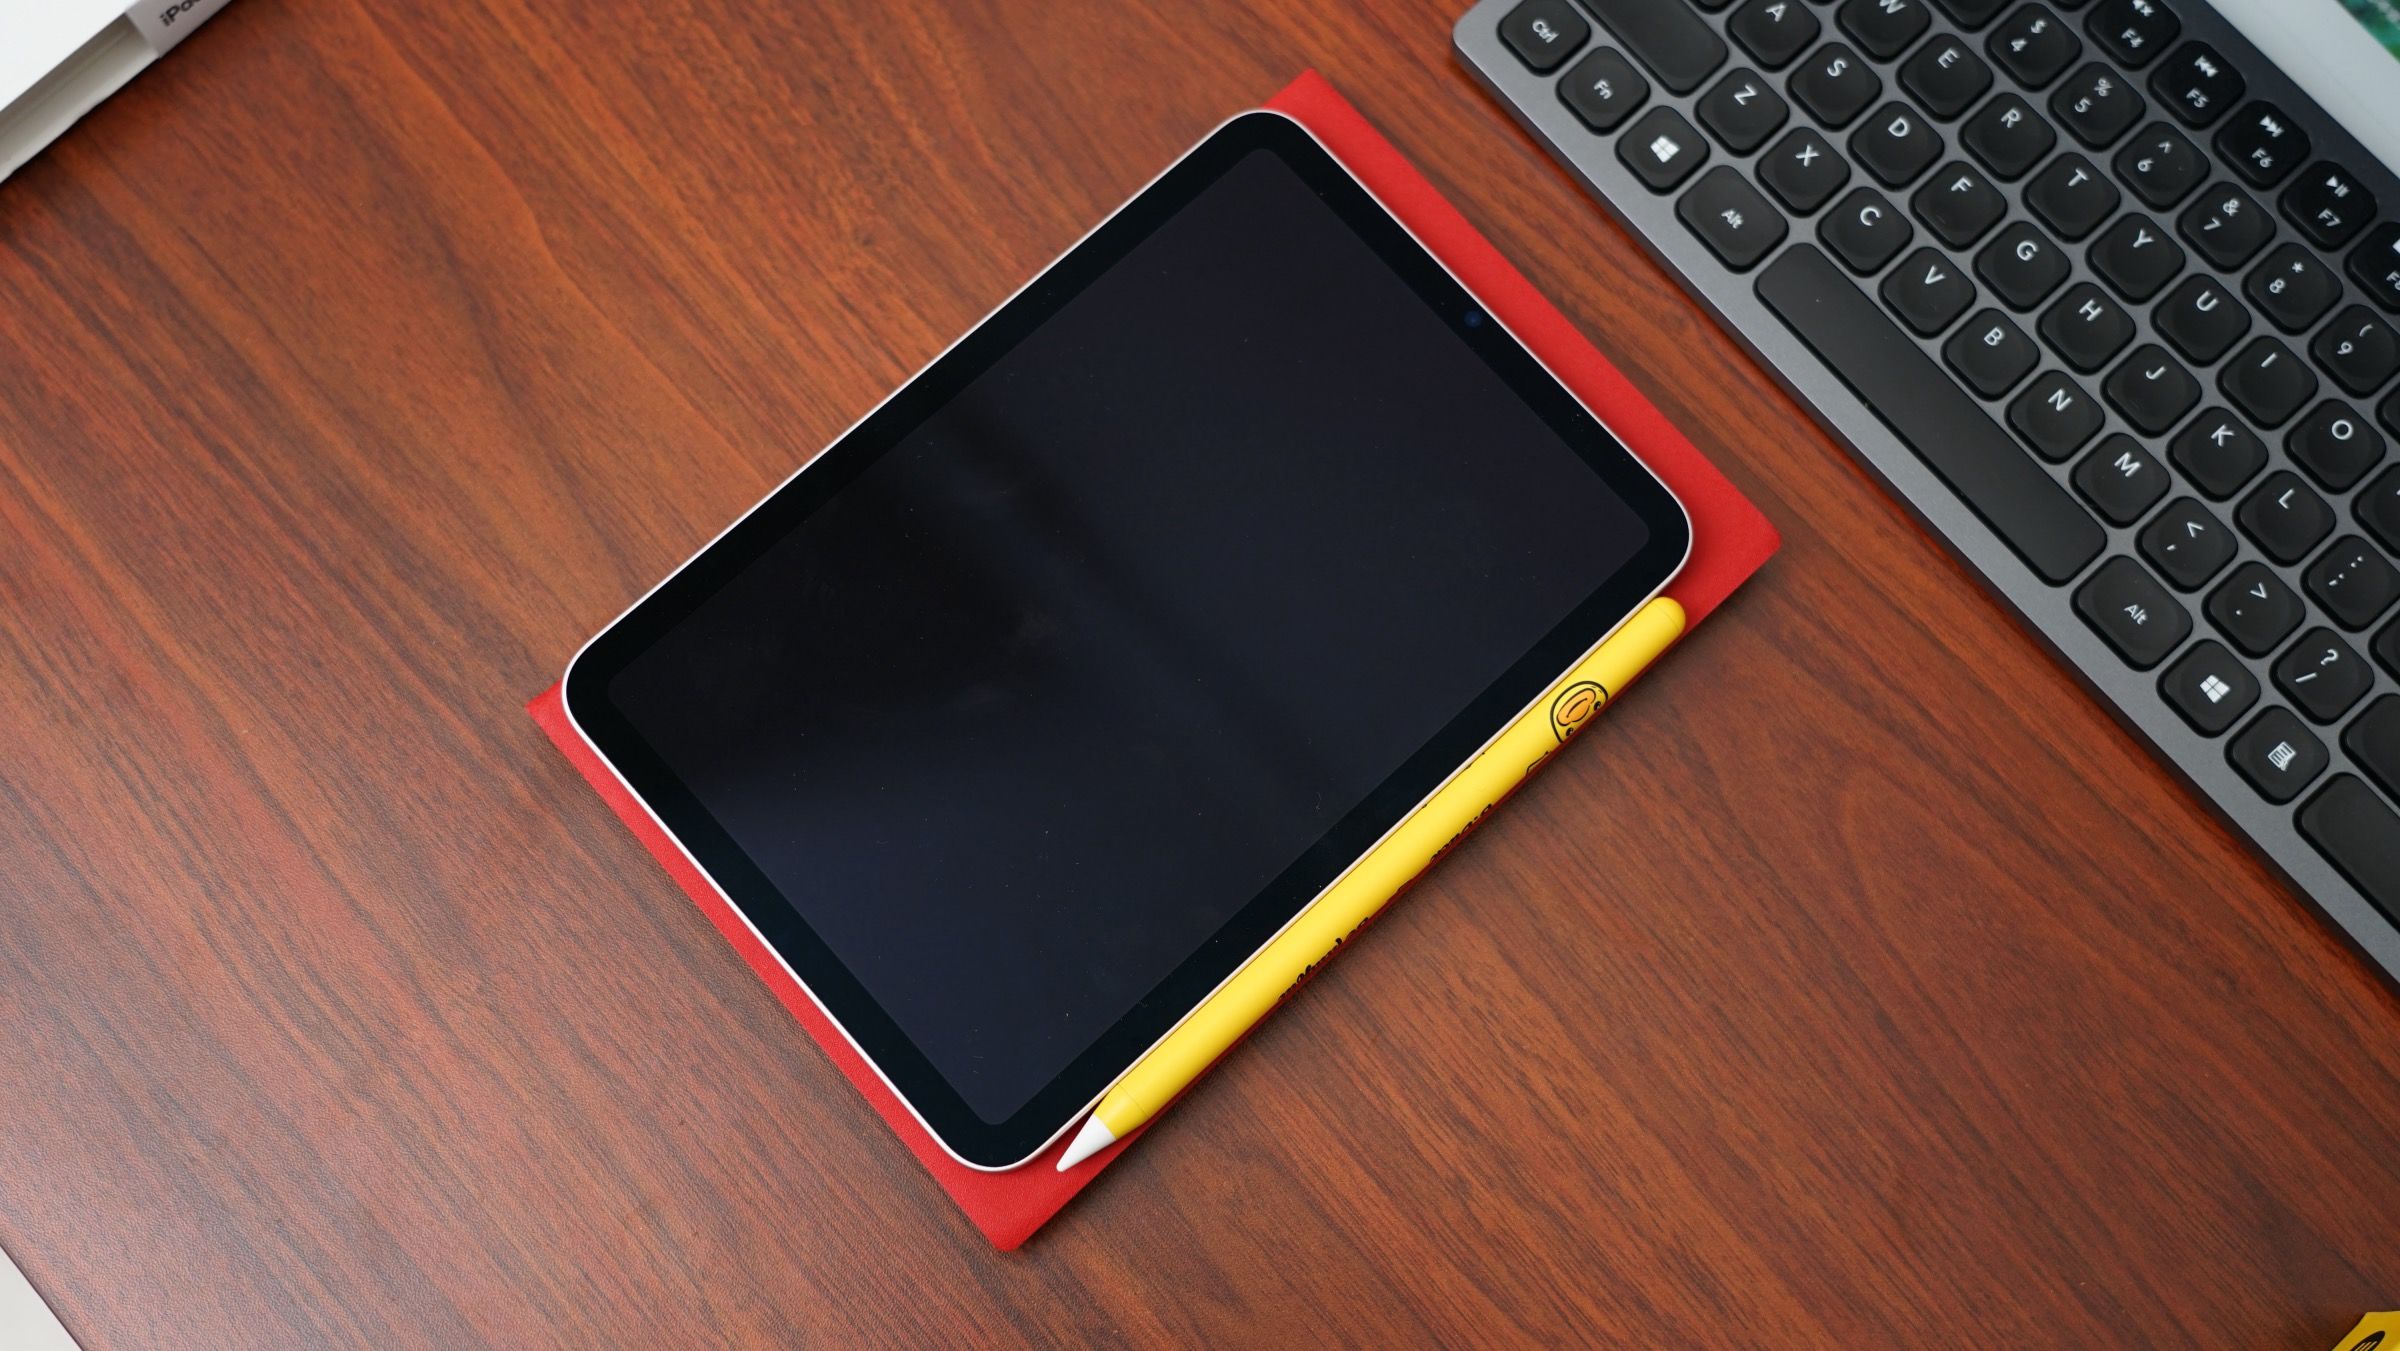 color|iPad mini6教育优惠真香，节省的500块买了一堆高质量配件